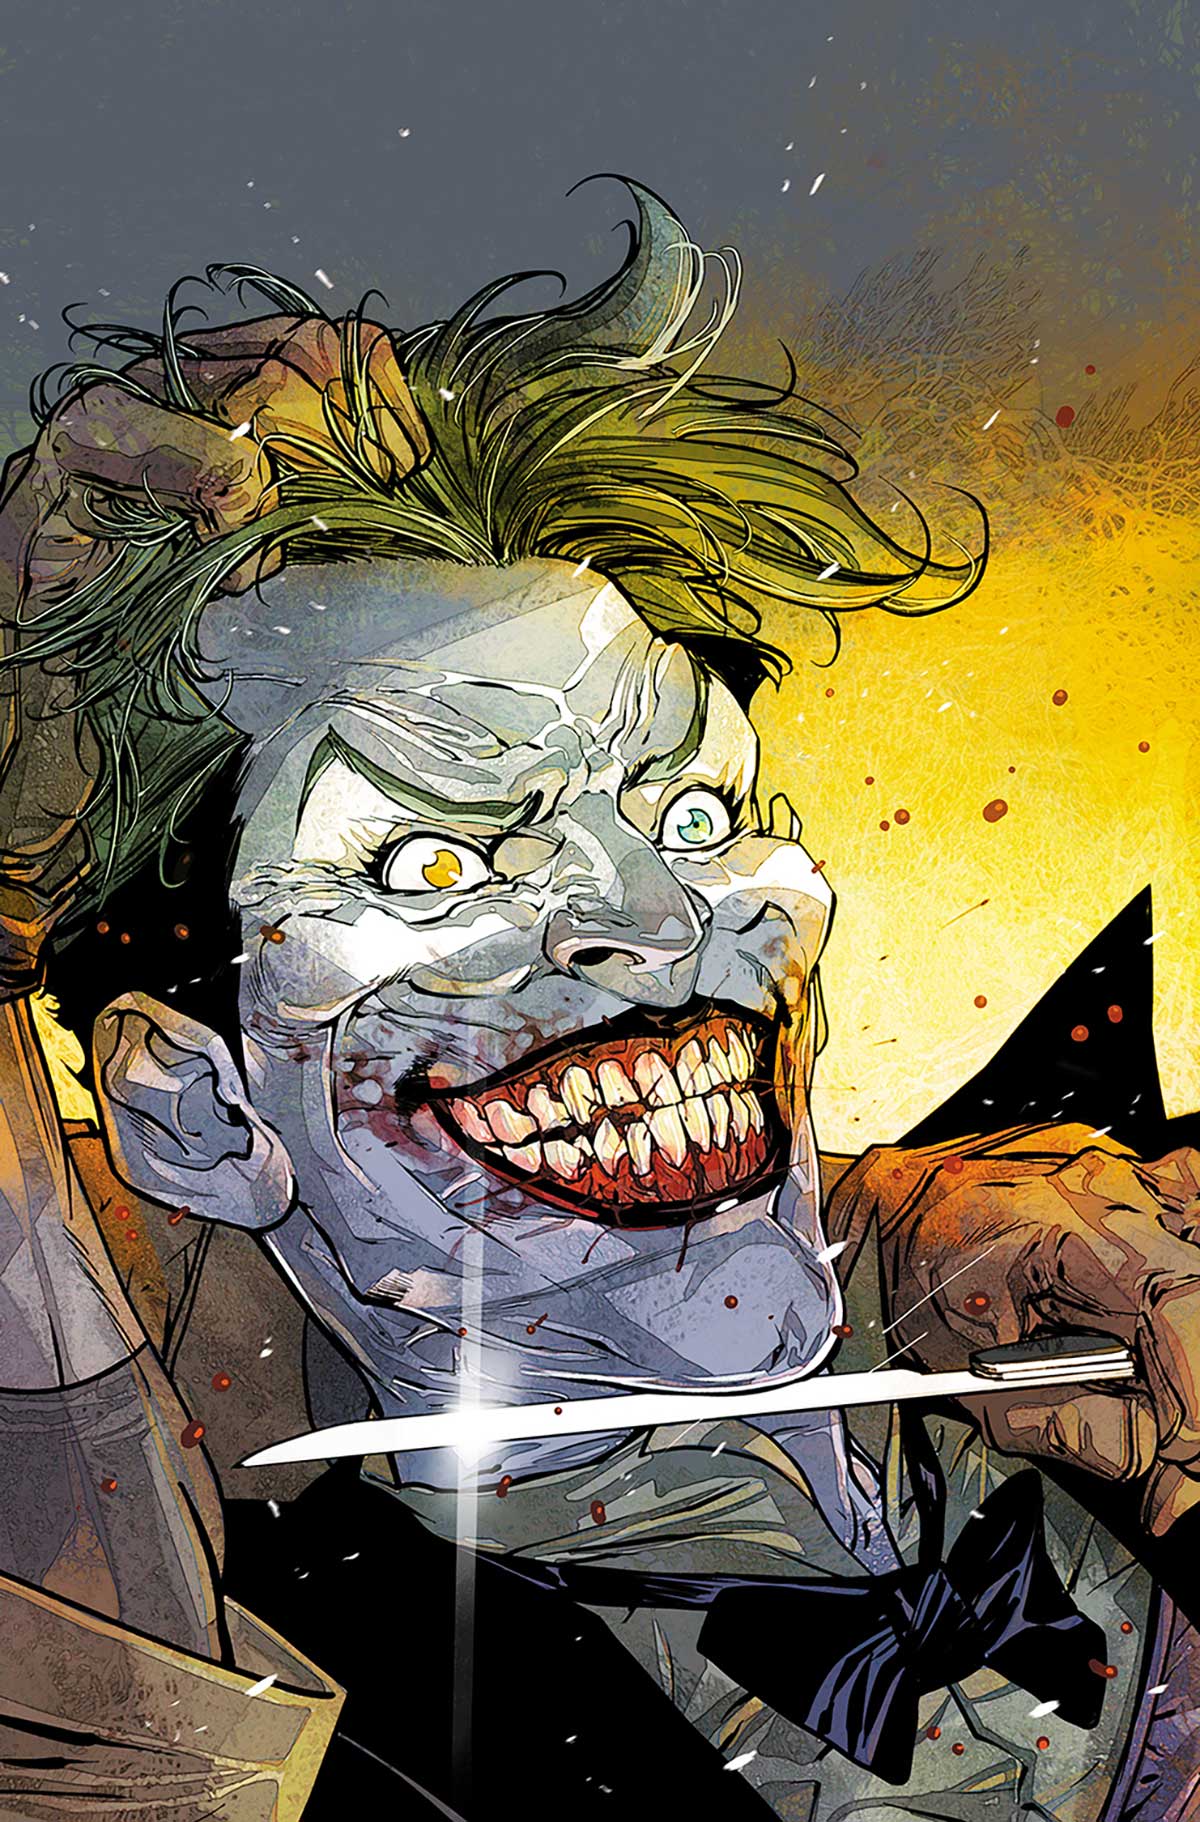 DC Comics Unveils The Killing Joke Artist Brian Bolland Variant